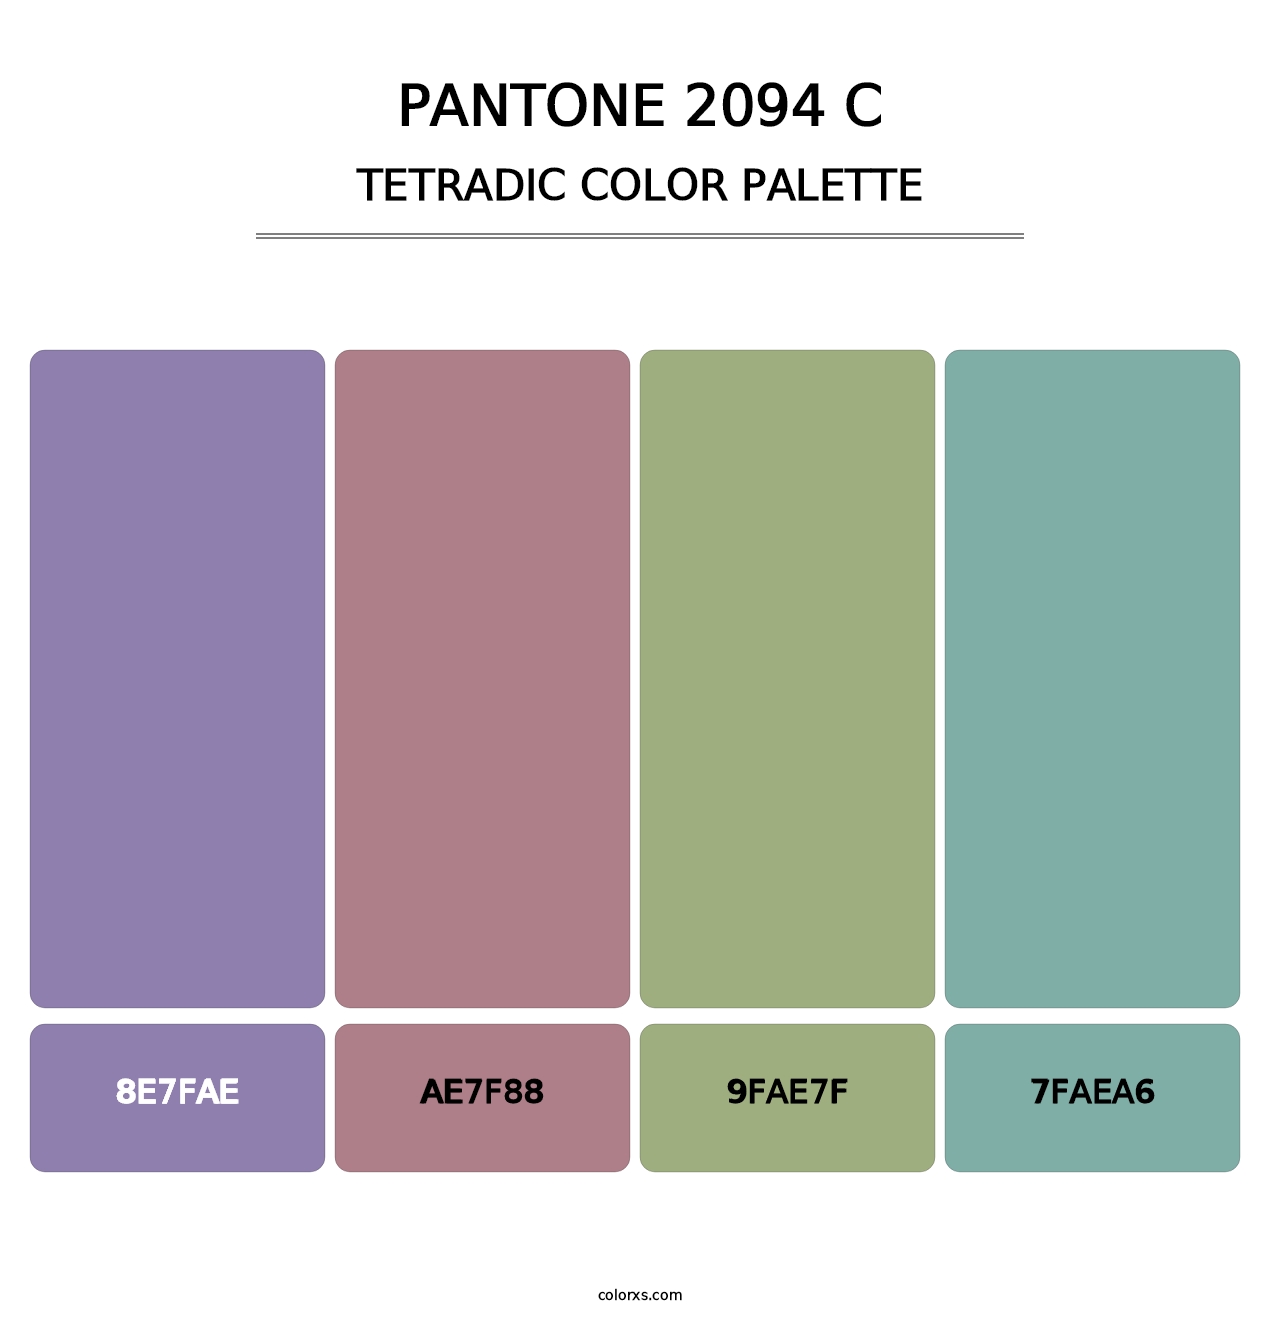 PANTONE 2094 C - Tetradic Color Palette